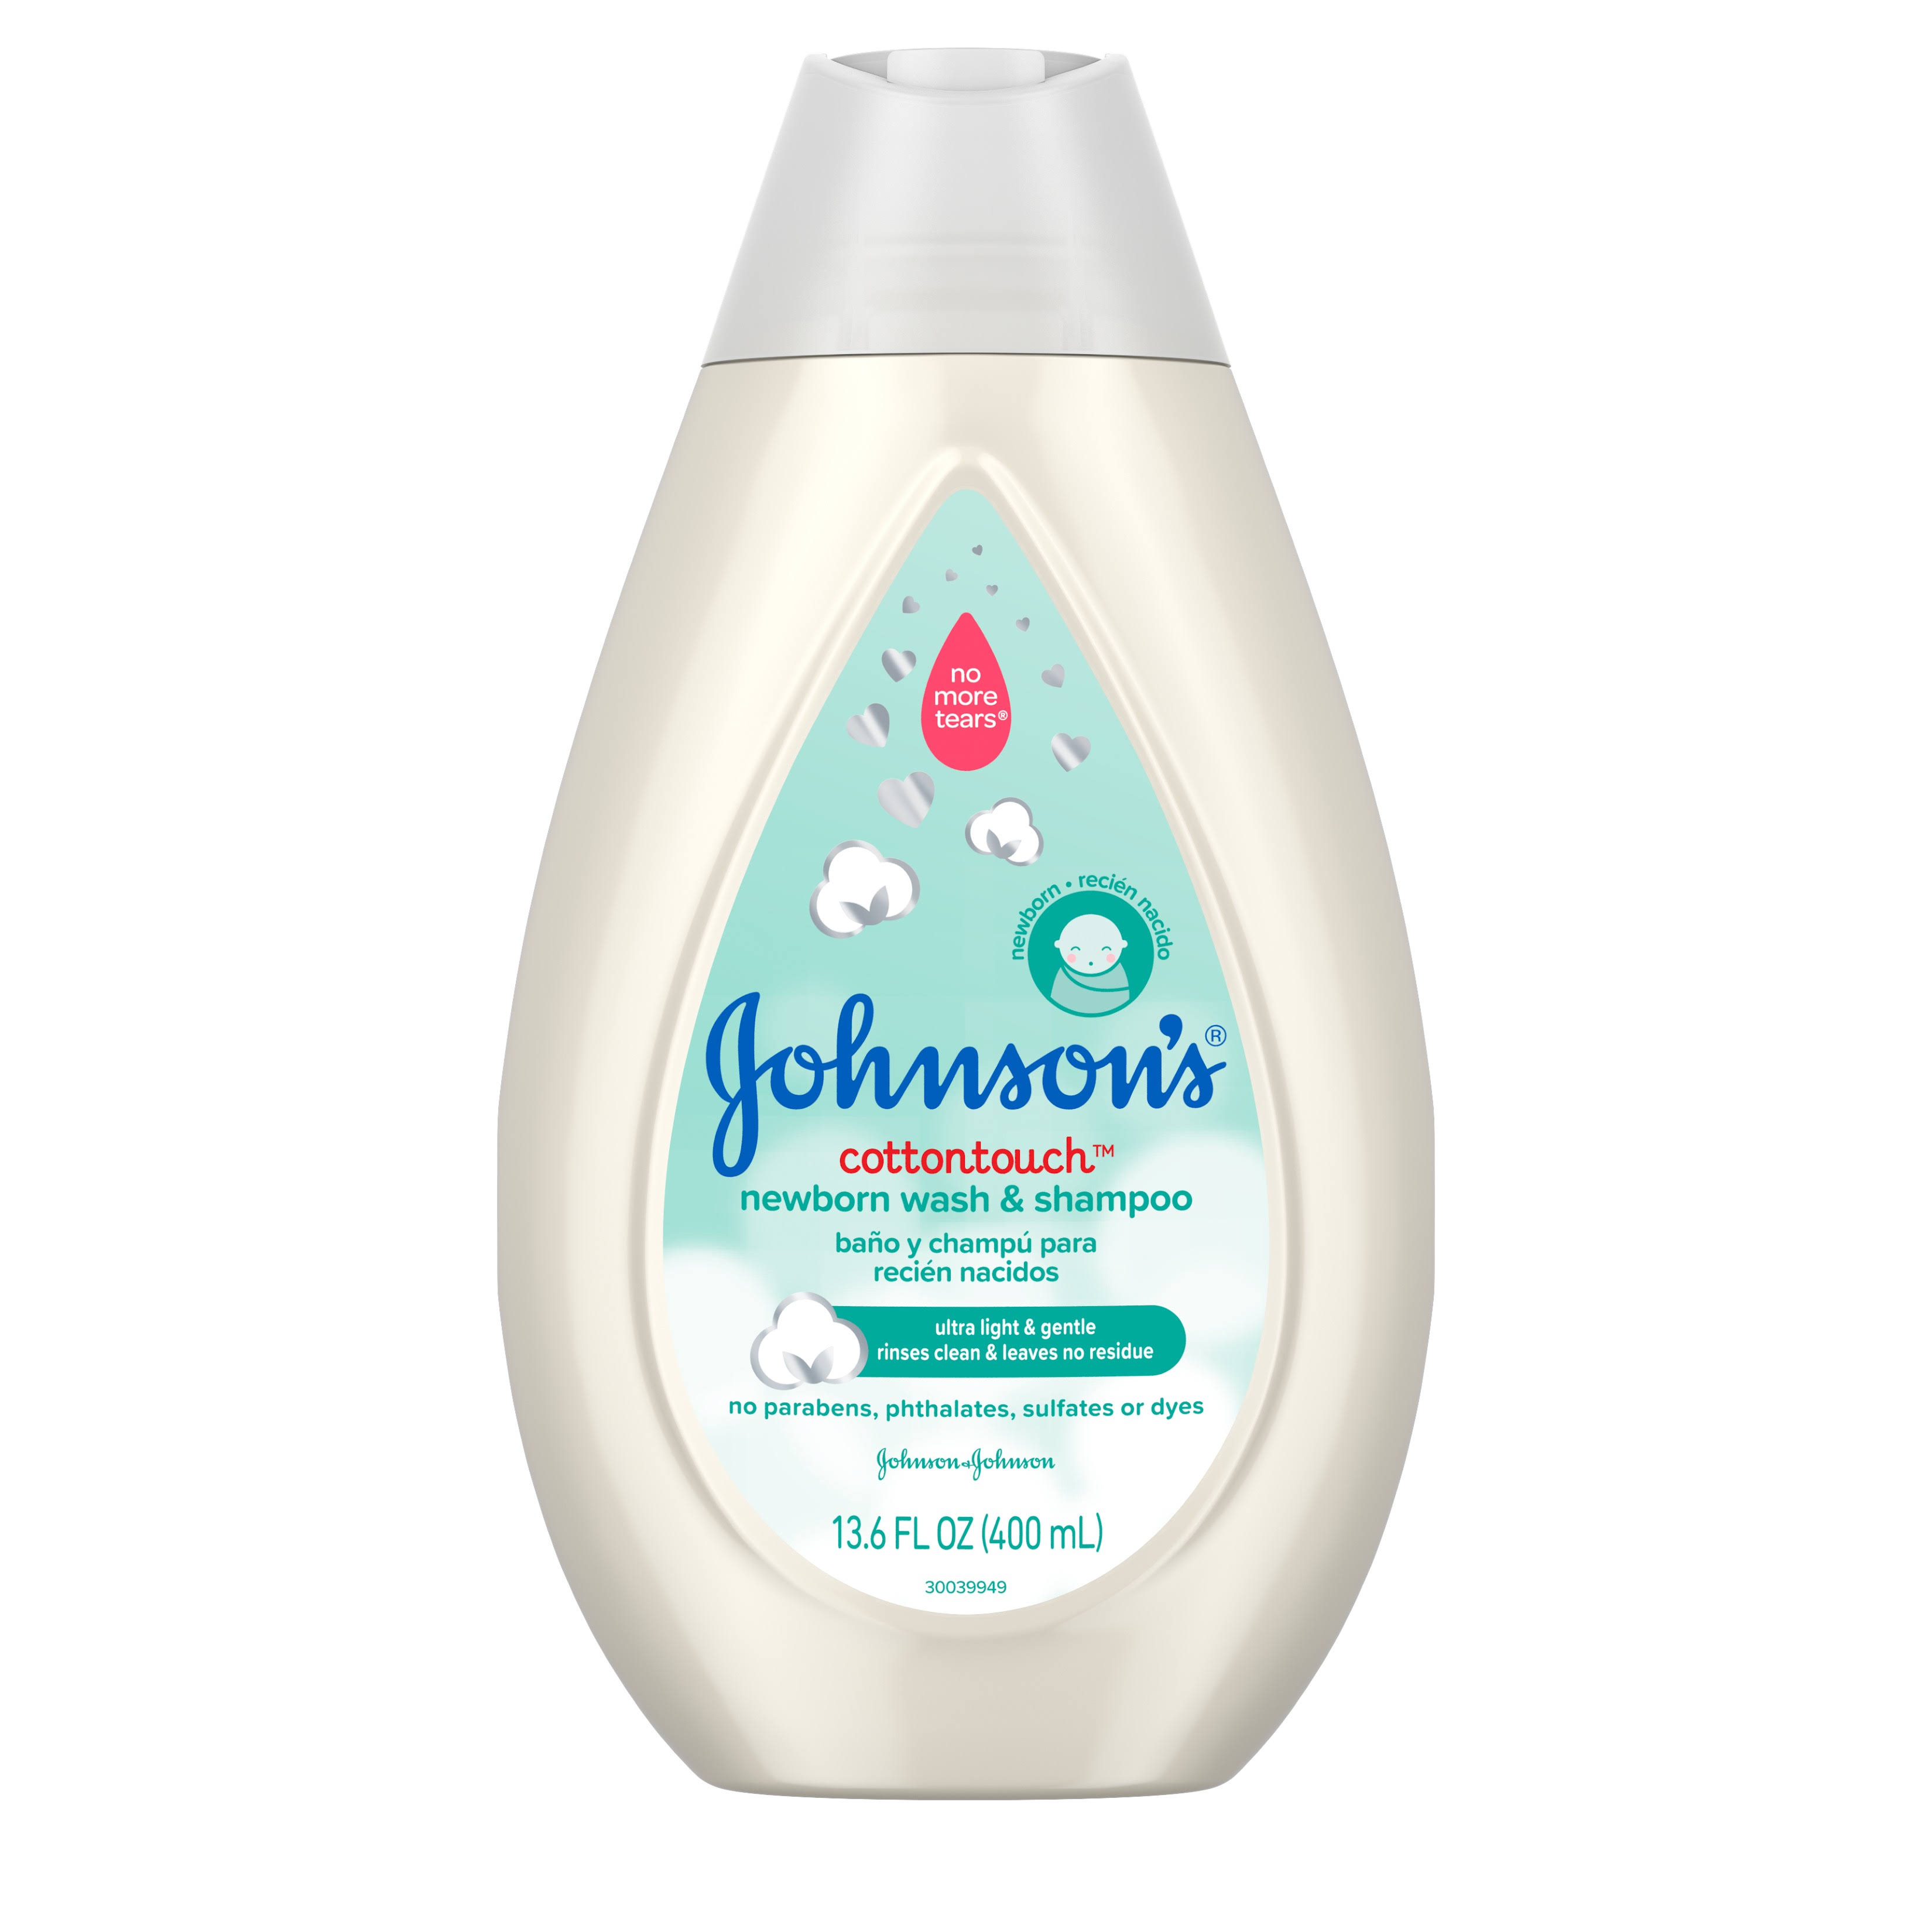 Johnson's cotton touch newborn baby wash & shampoo 13.6 oz